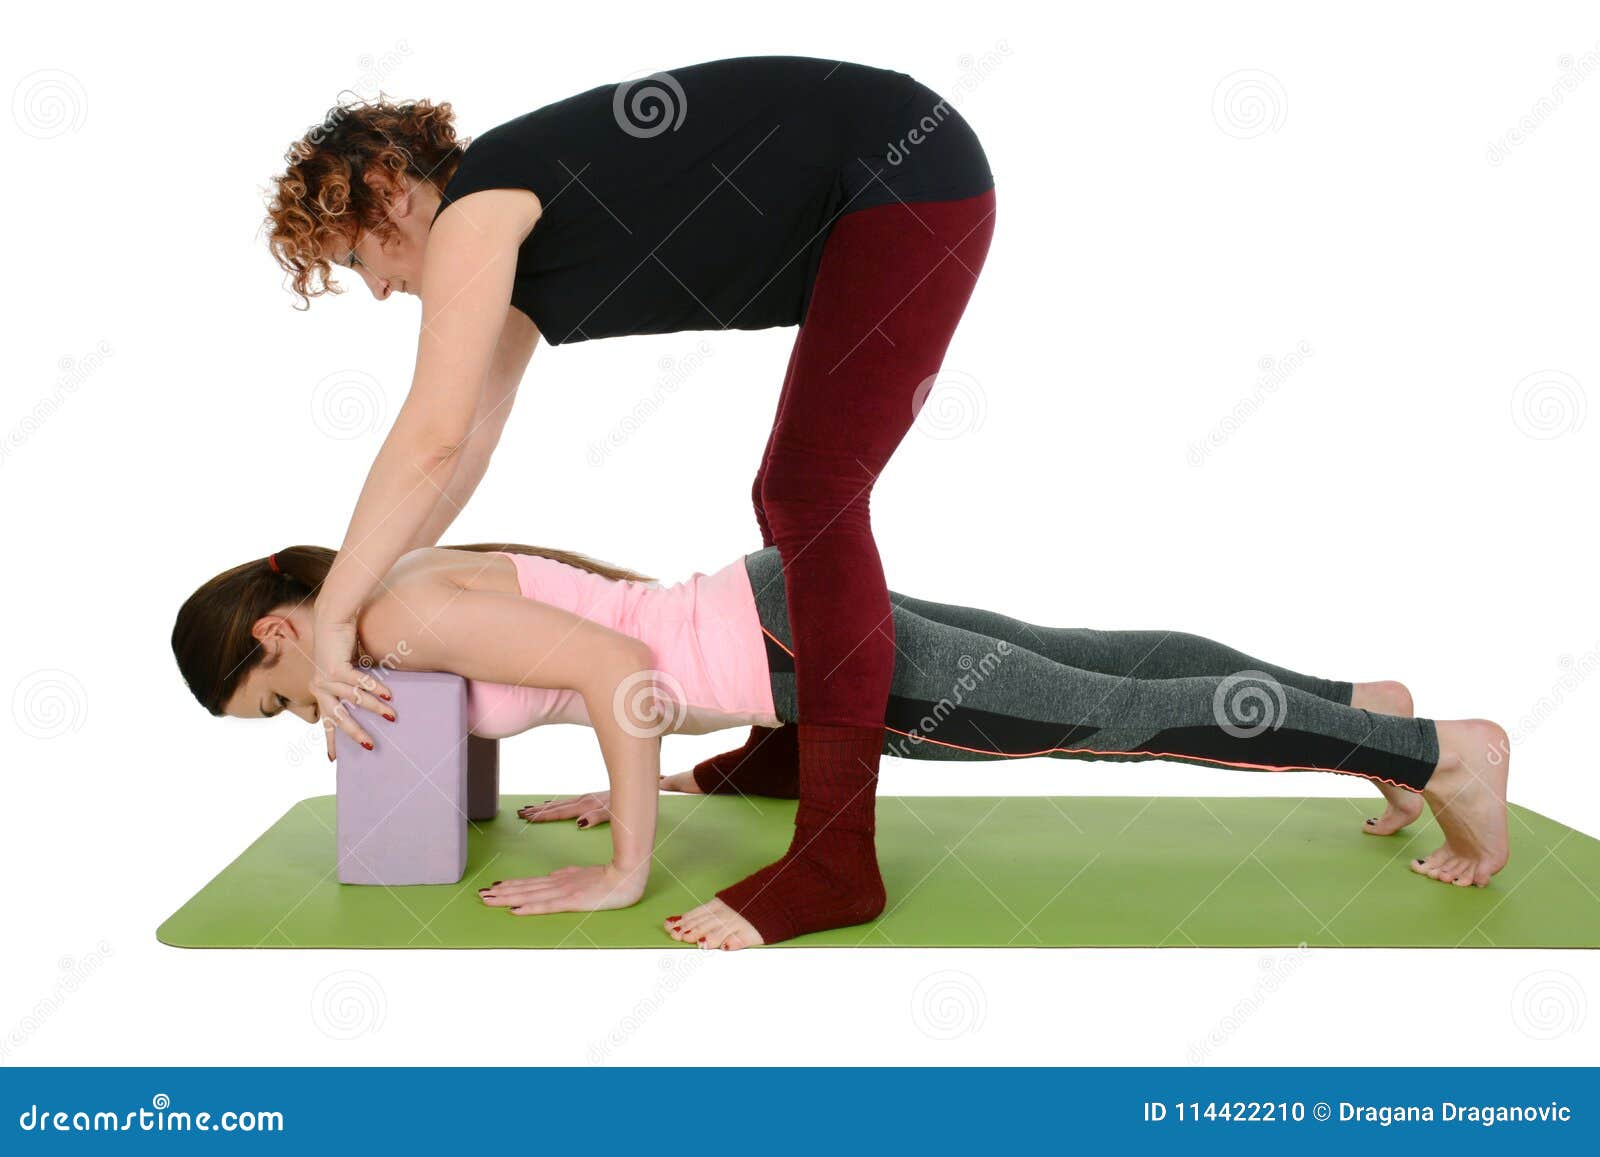 Premium Vector | Woman in four different yoga poses